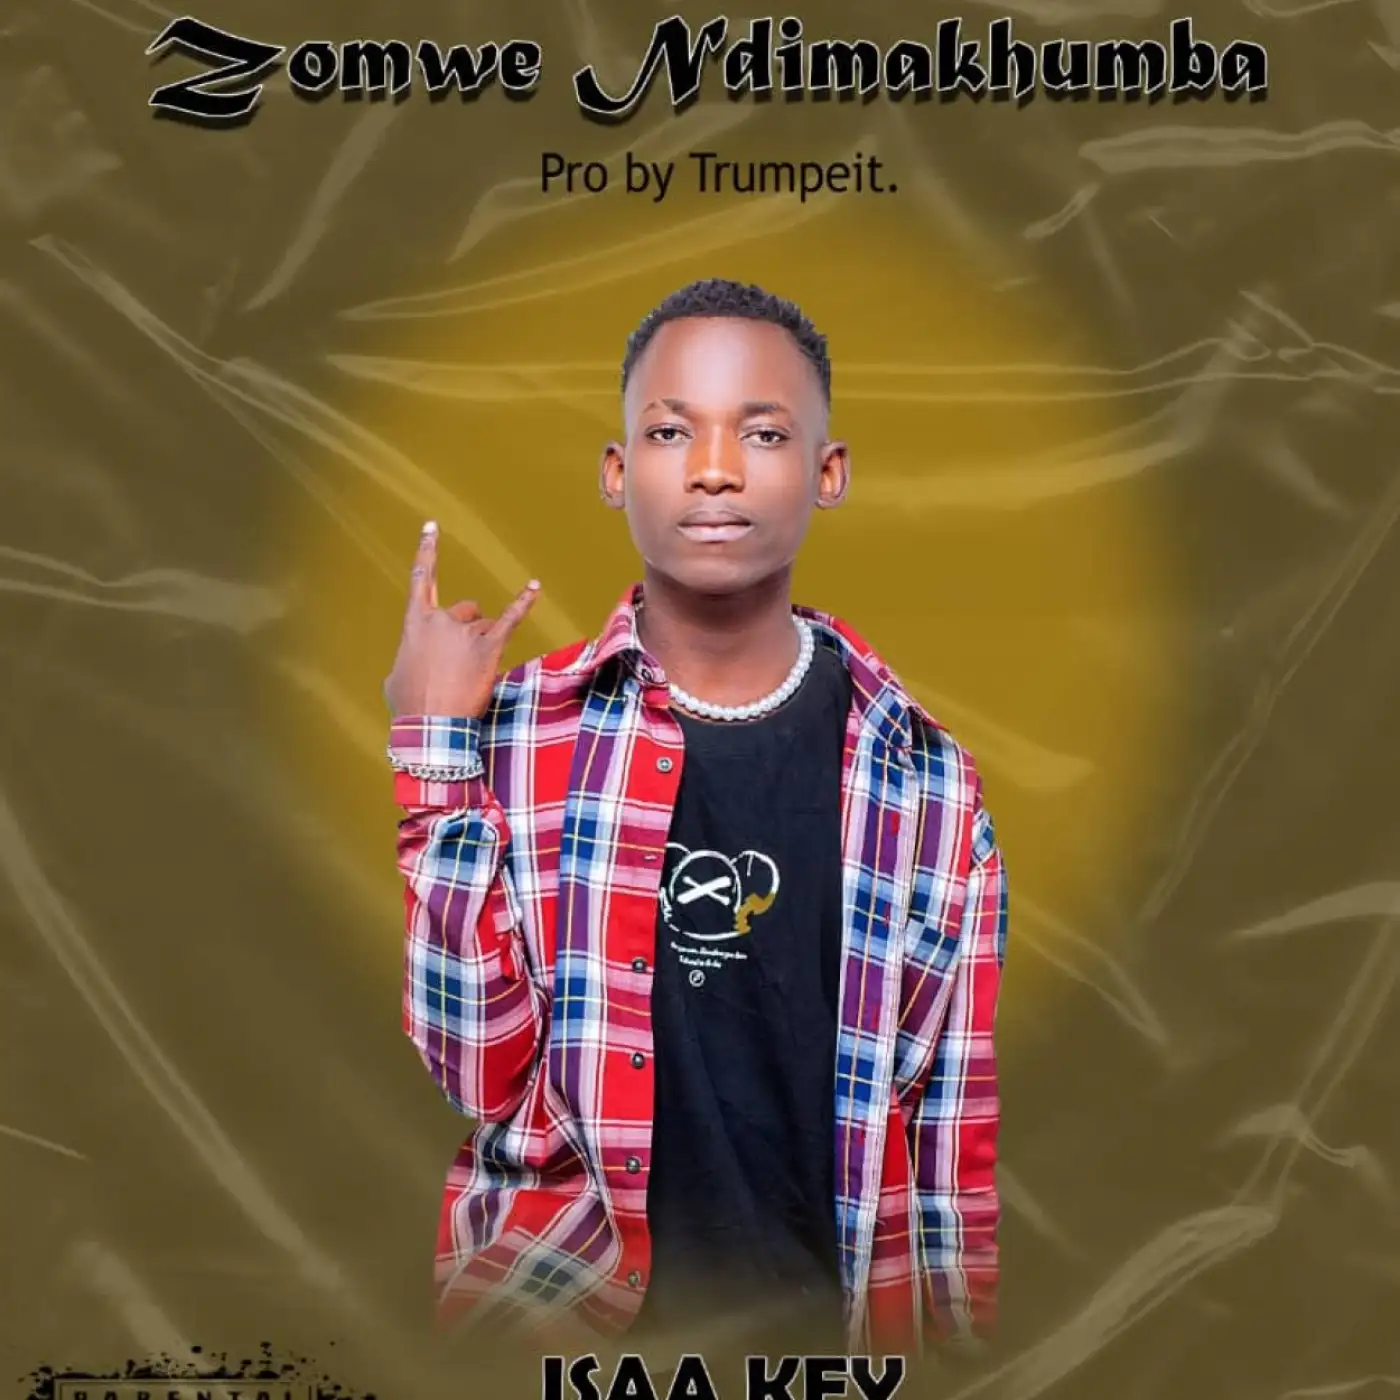 Isaa kay-Isaa kay - Zomwe Ndimakhumba (Prod. Trumpeit)-song artwork cover